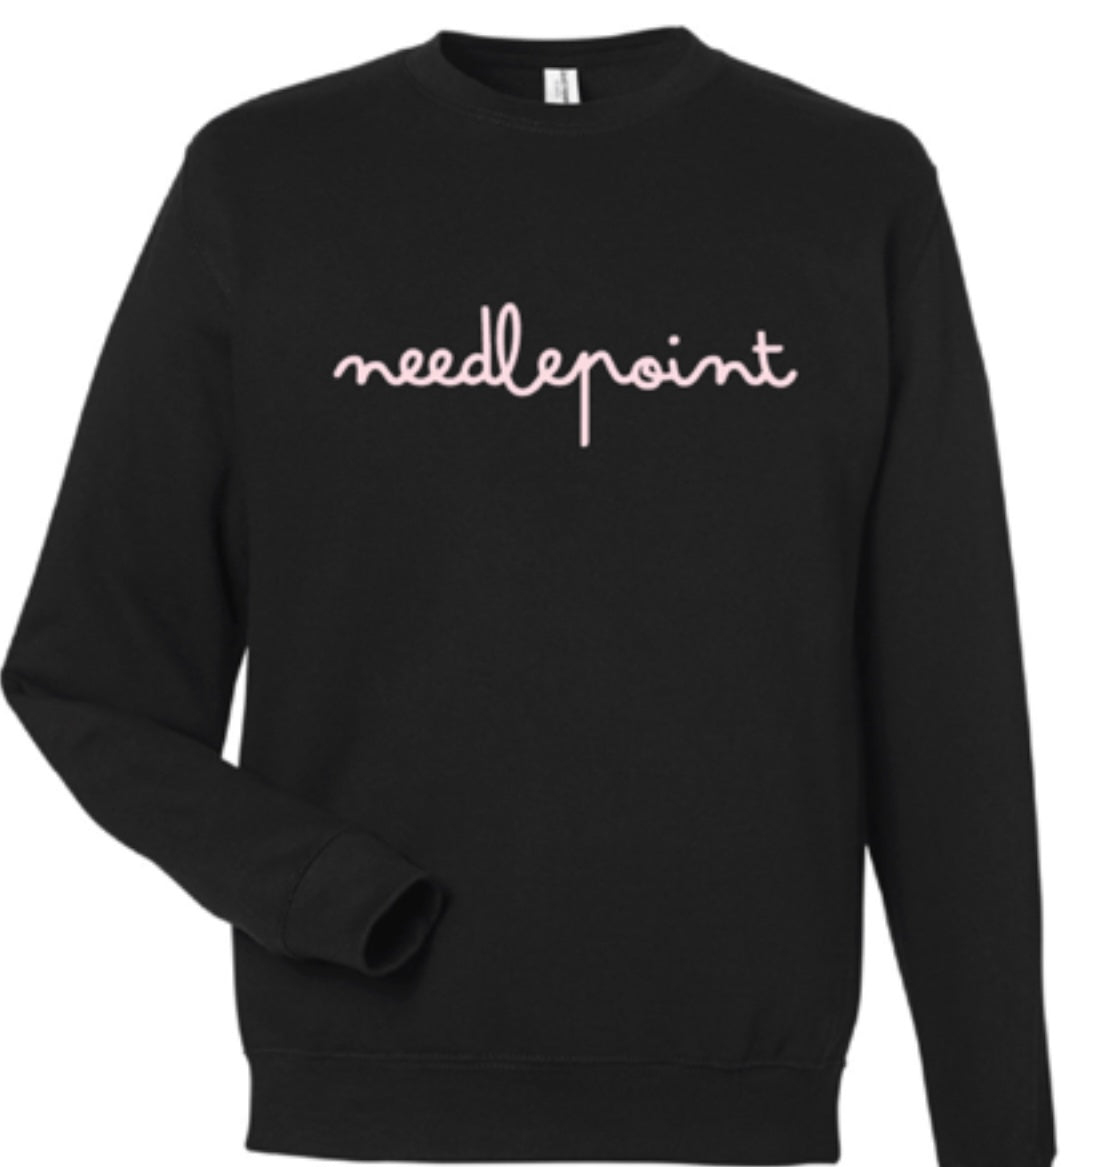 needlepoint sweatshirt - jet black